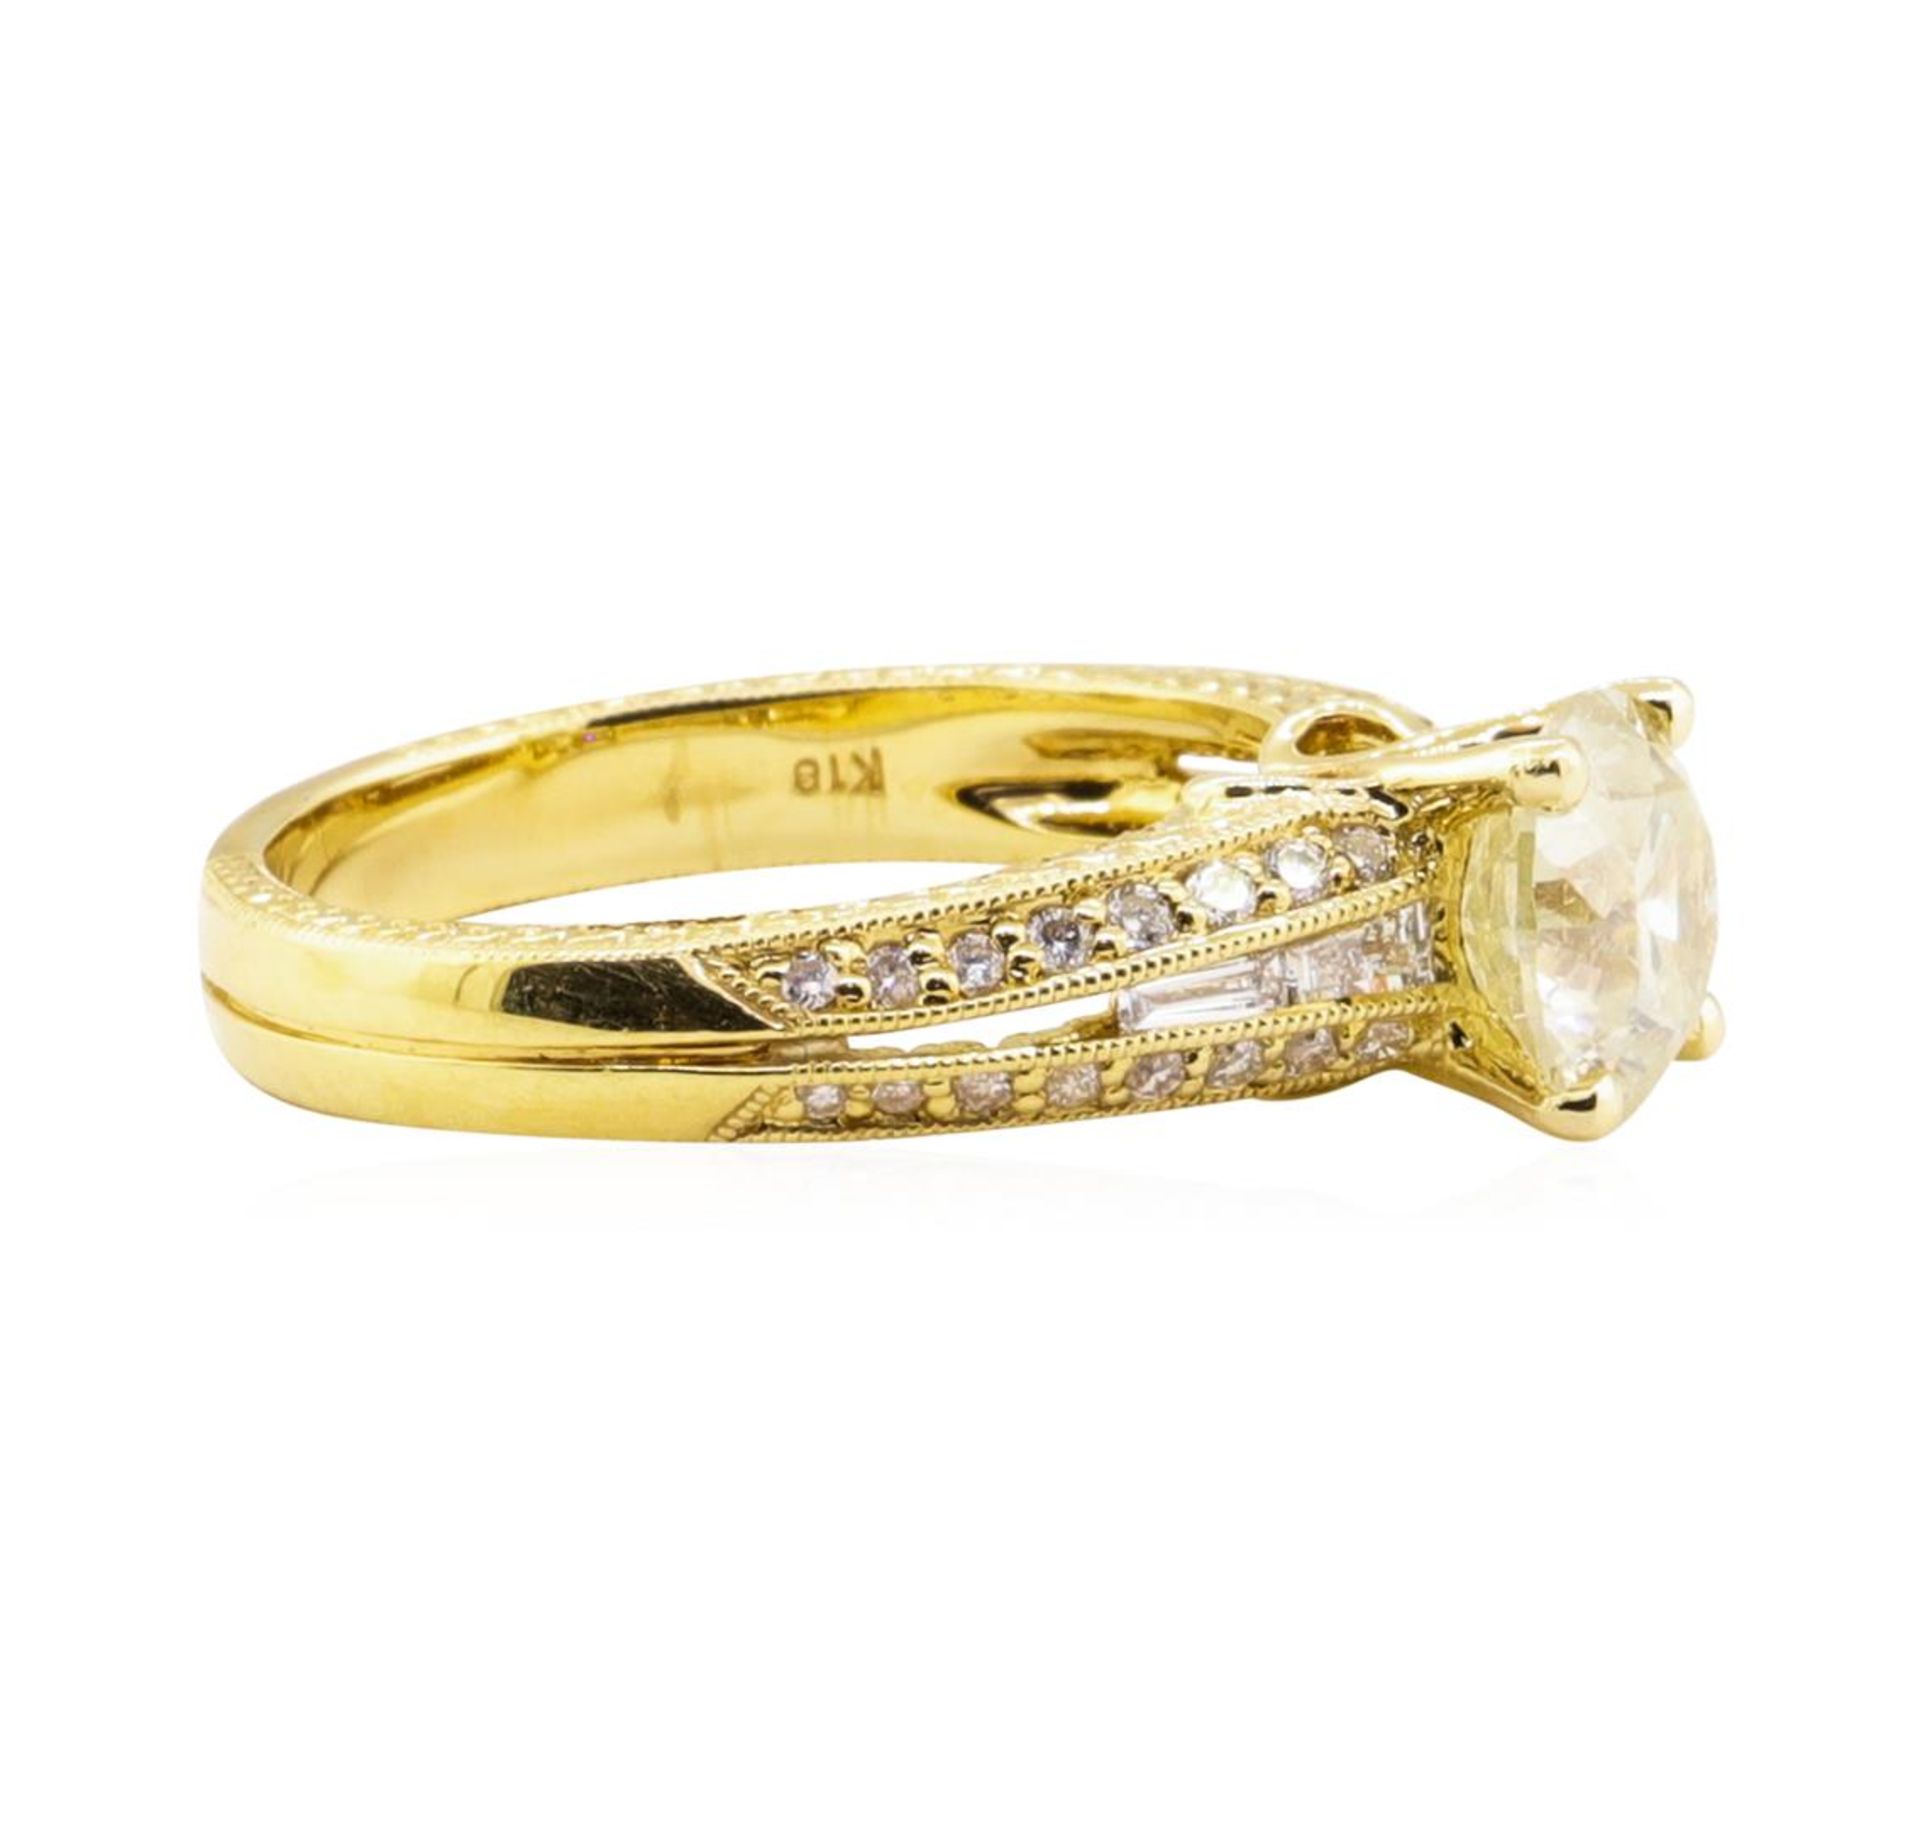 1.67 ctw Diamond Ring - 18KT Yellow Gold - Image 2 of 5